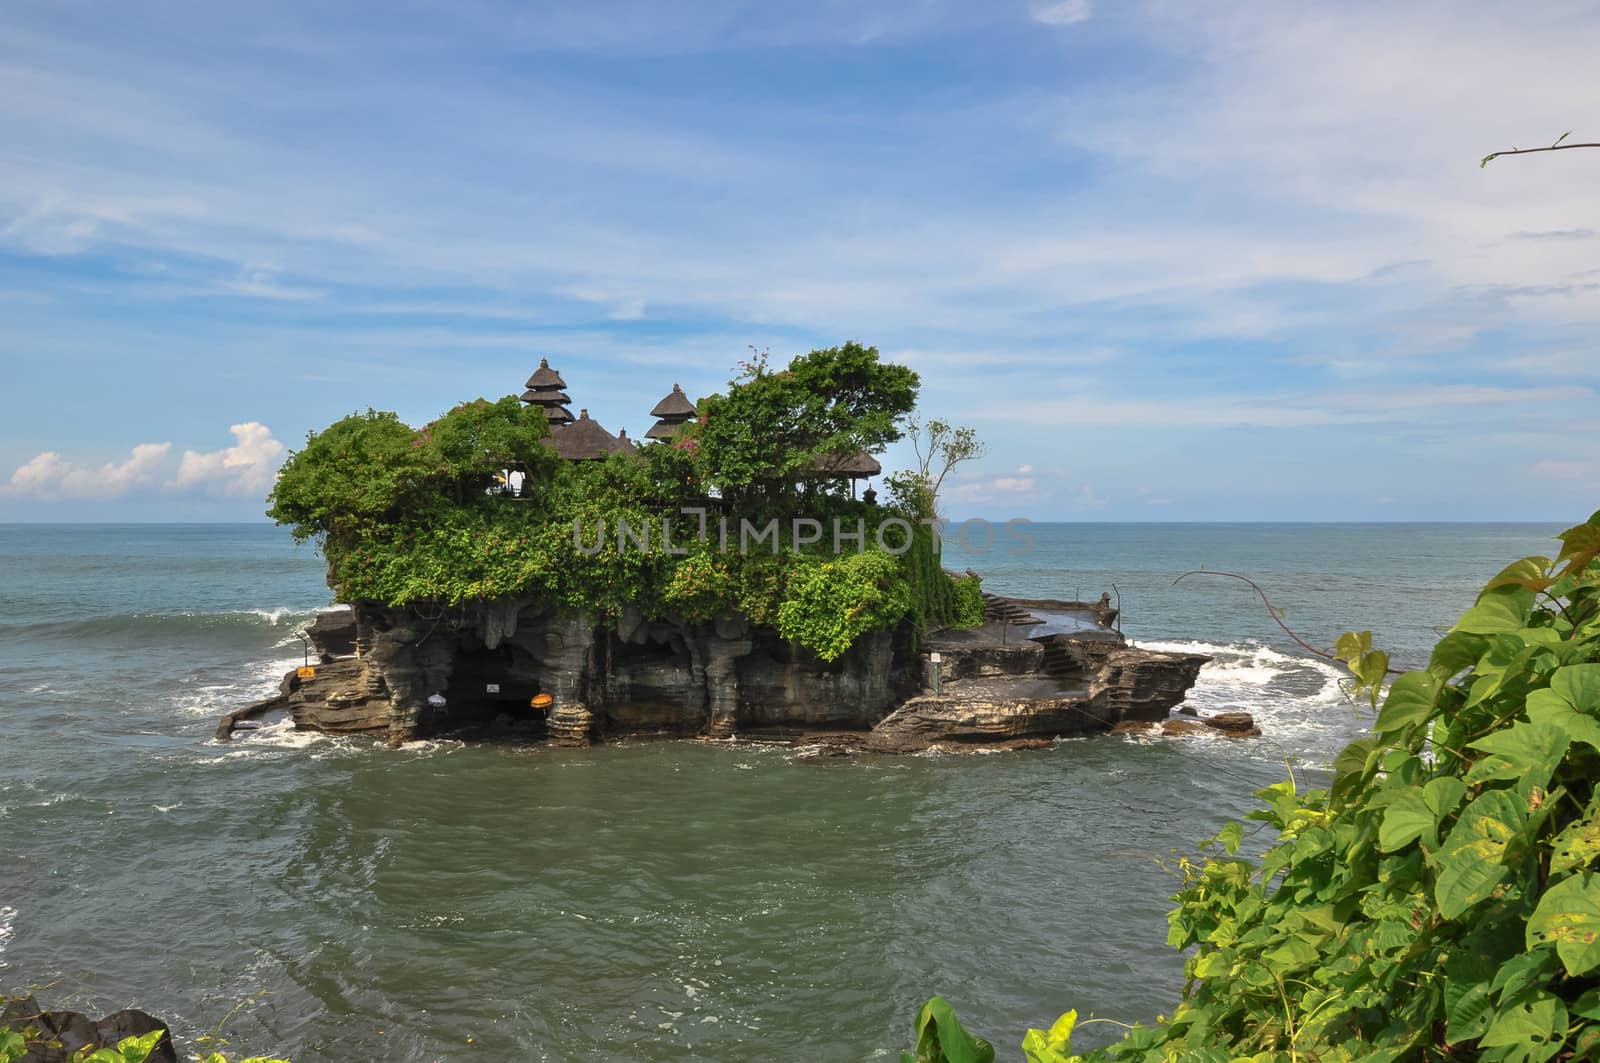 Tanah Lot Temple Sea in Bali Island Indonesia by weltreisendertj